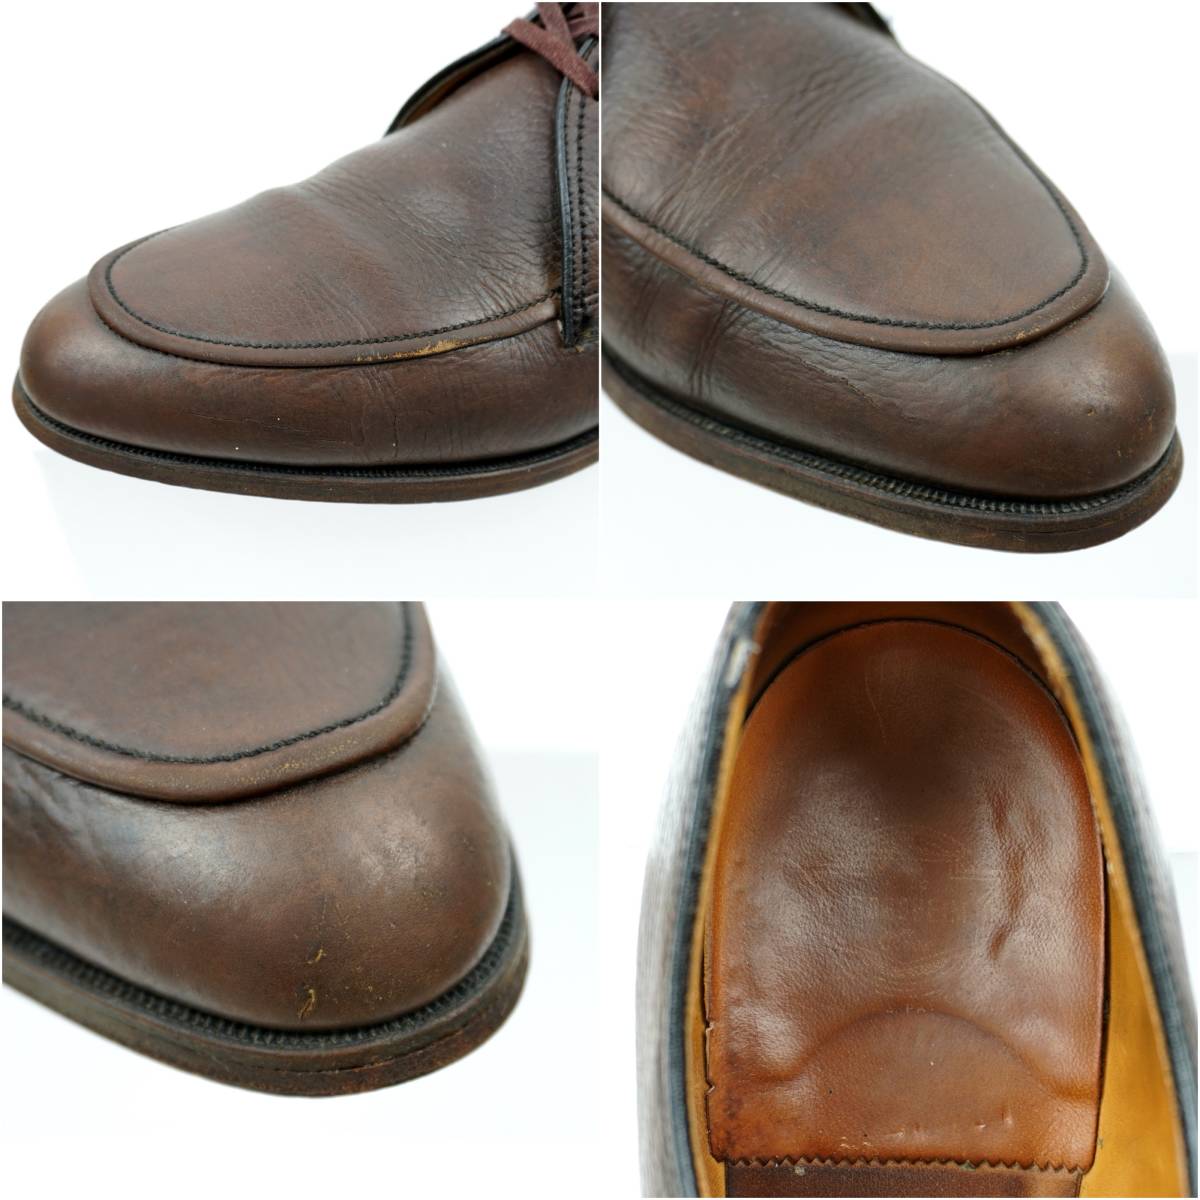 FLORSHEIM THE CHEVRON 1965s US9.0D Vintage フローシャイム シェブロン ユーチップ 革靴 1960年代 ヴィンテージ 27.0cm 古靴_画像9